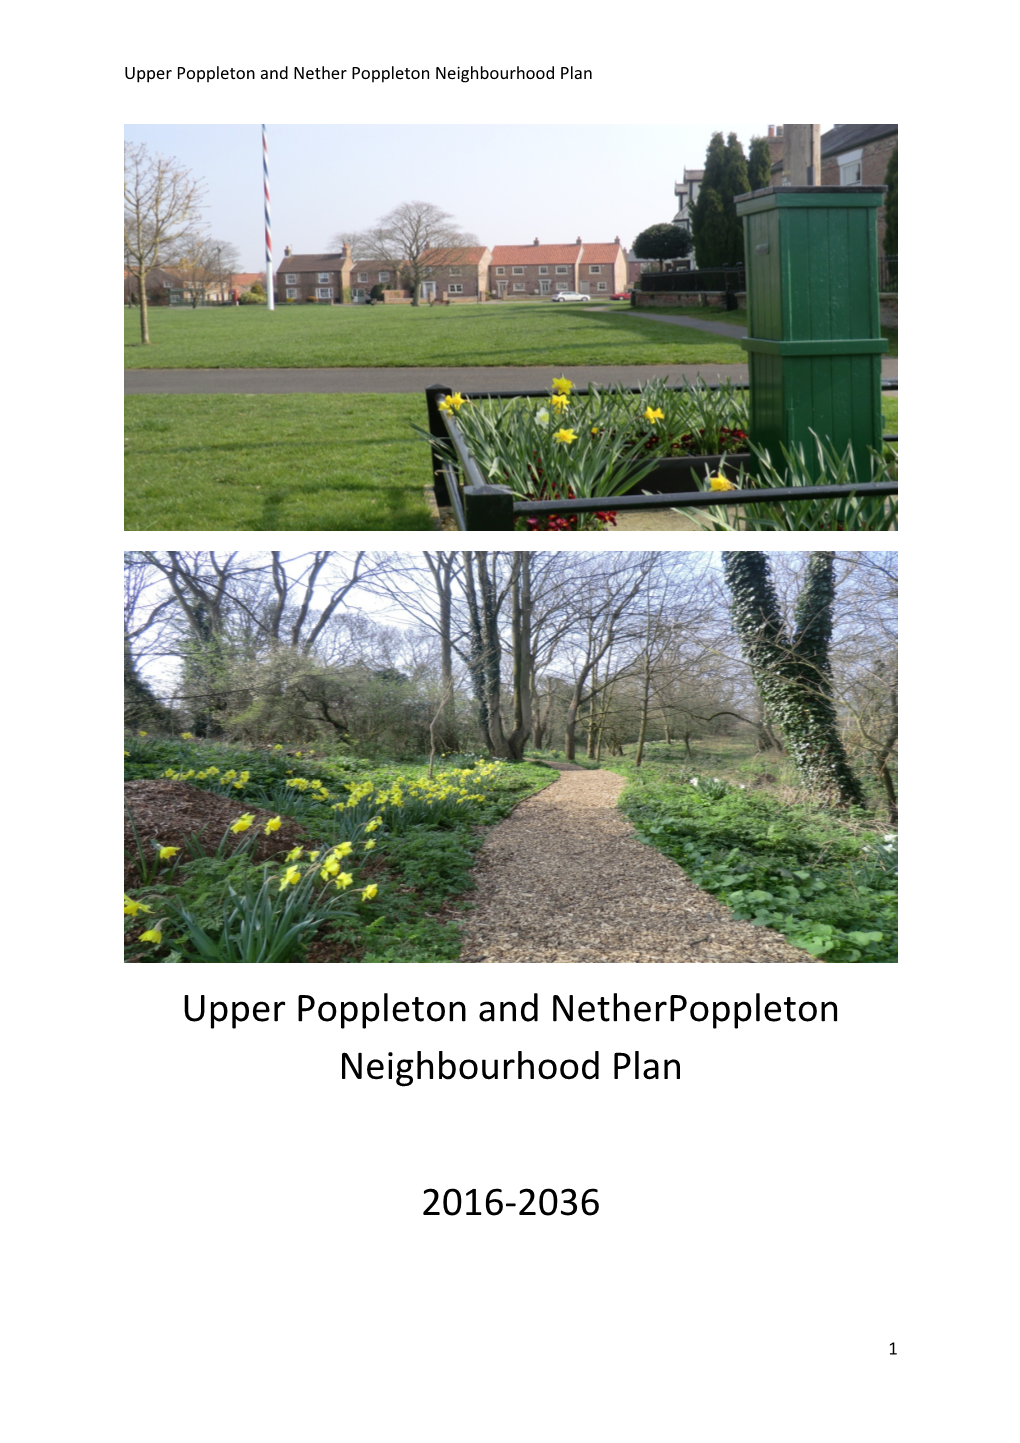 Upper and Nether Poppleton Neighbourhood Plan